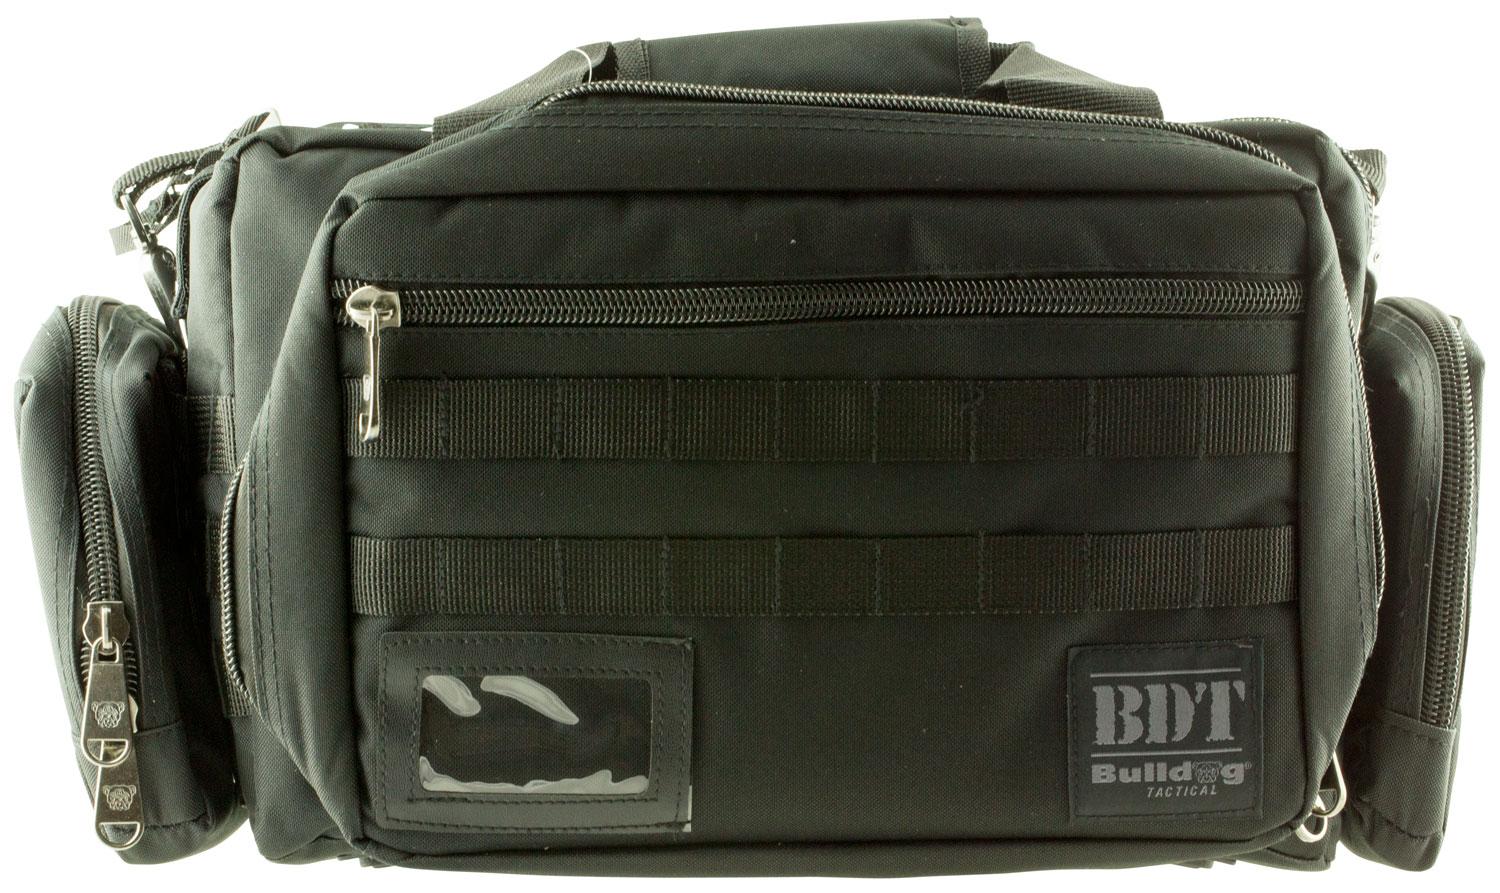  Bulldog Bdt930b Xl Tact Range Bag Blk